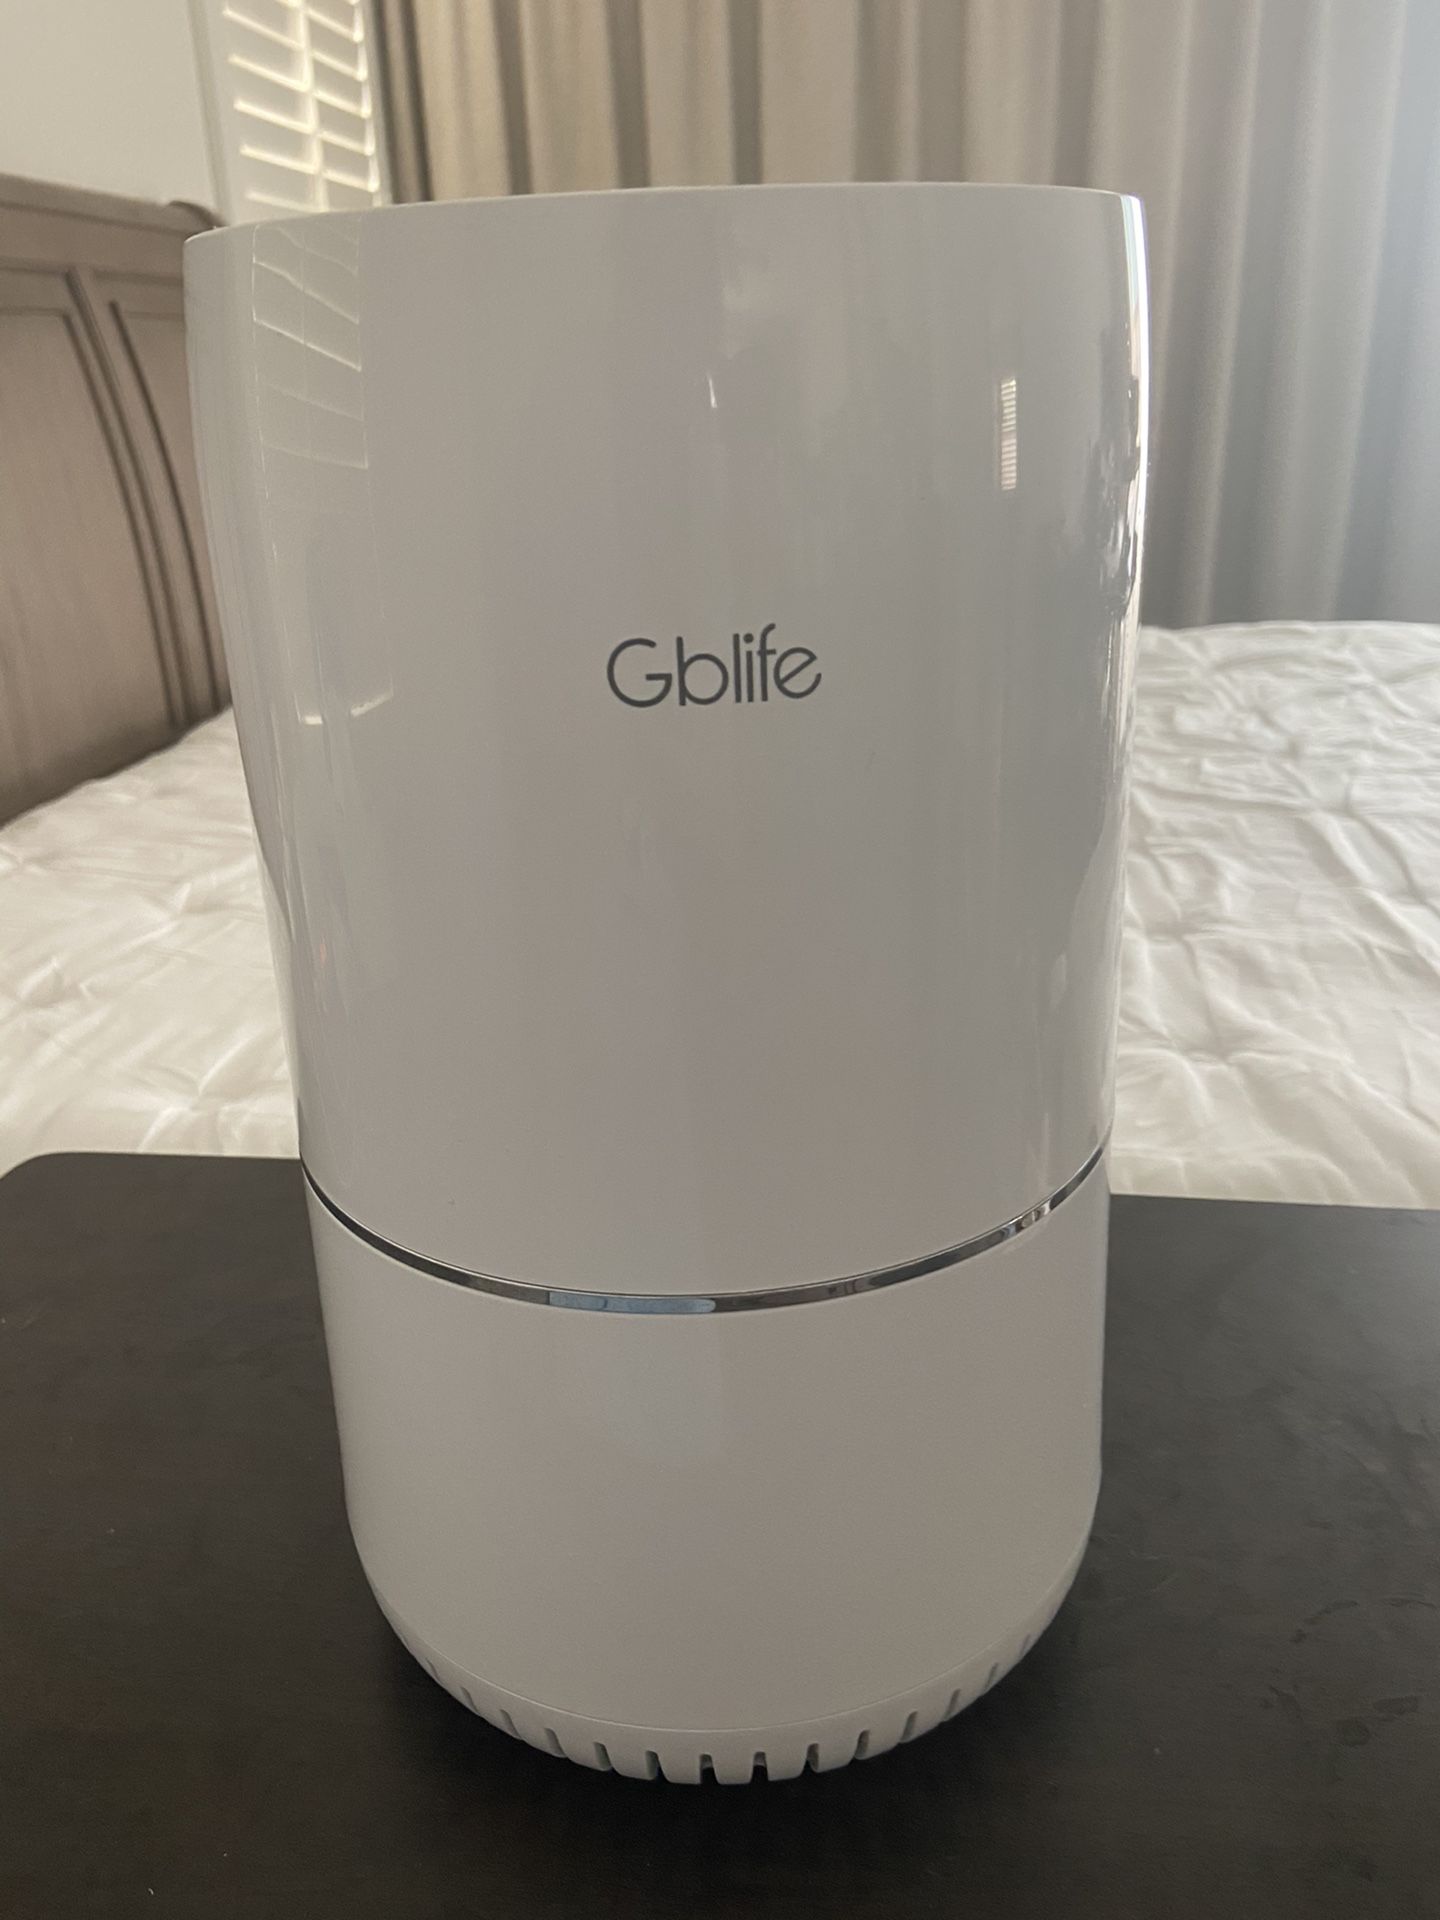 Gblife Home Hepa Air Filter